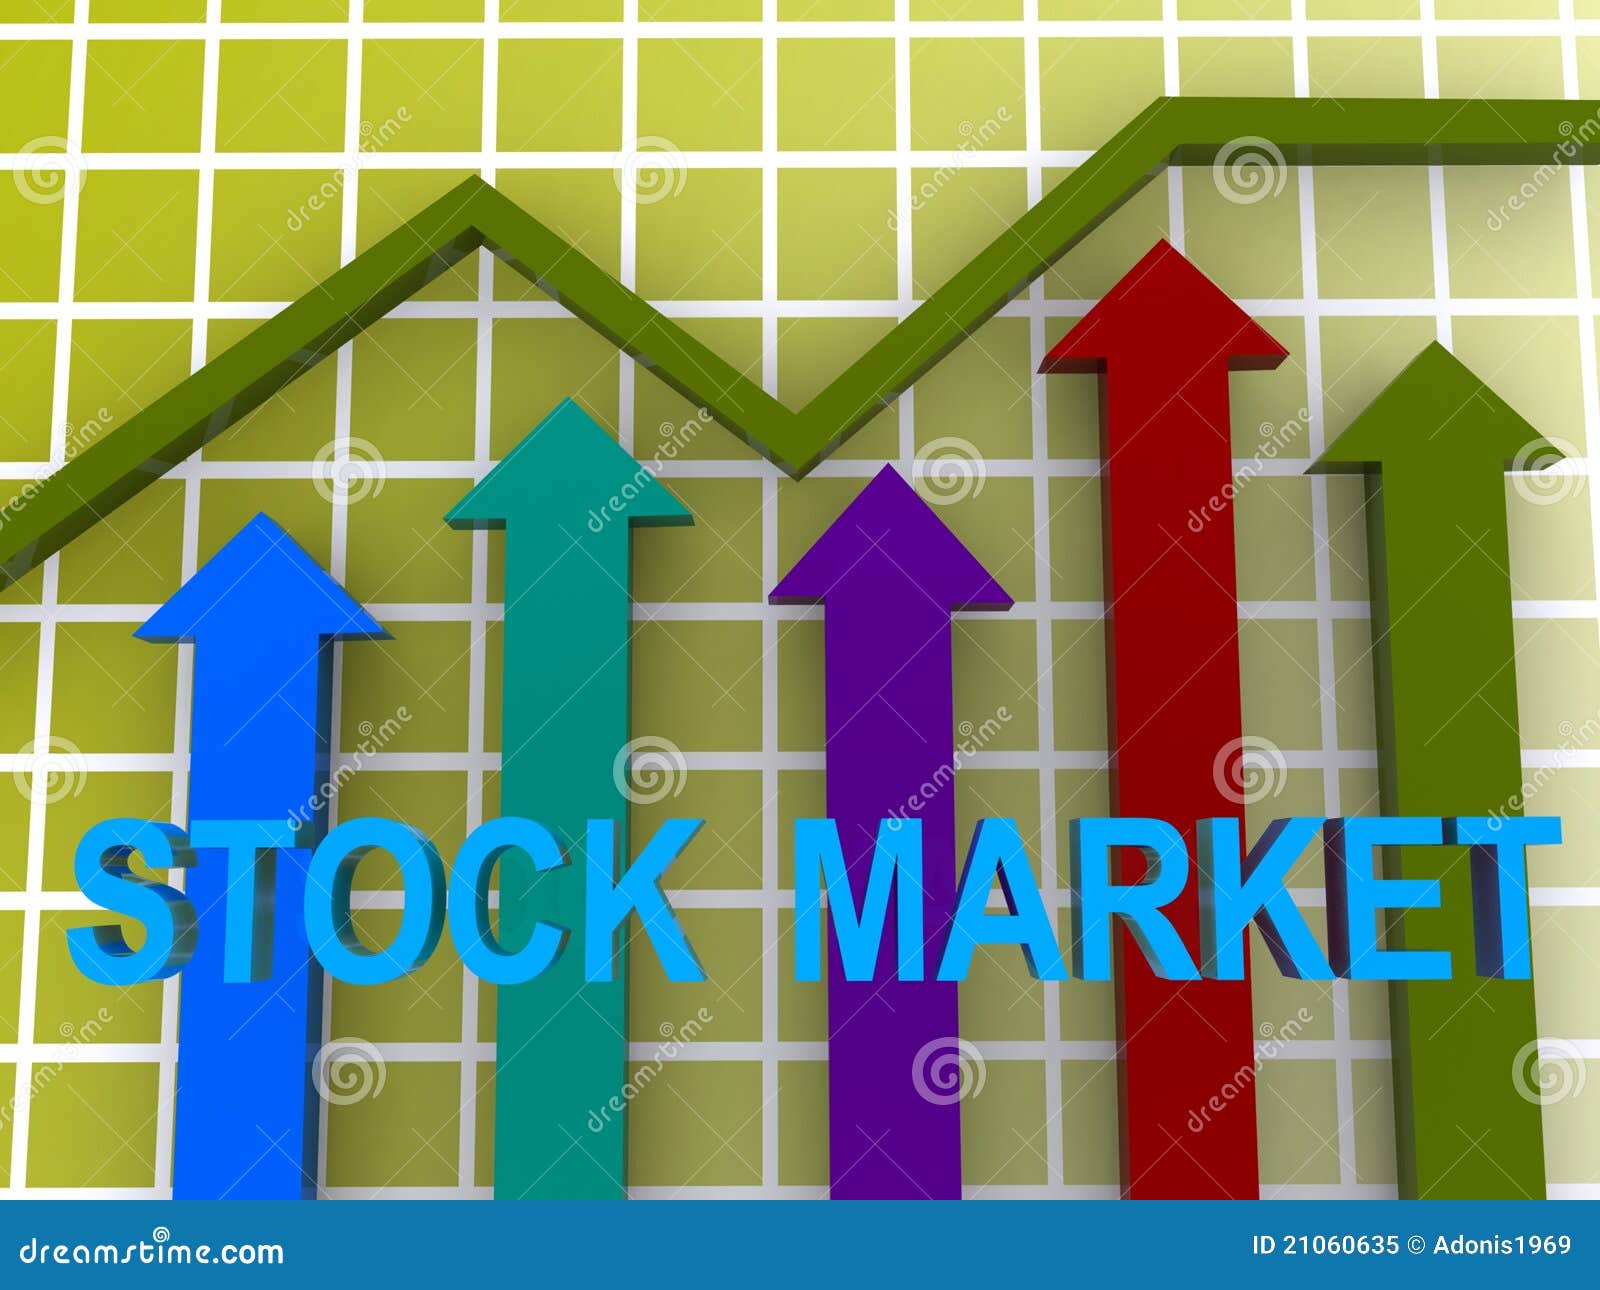 stock market clipart images - photo #45